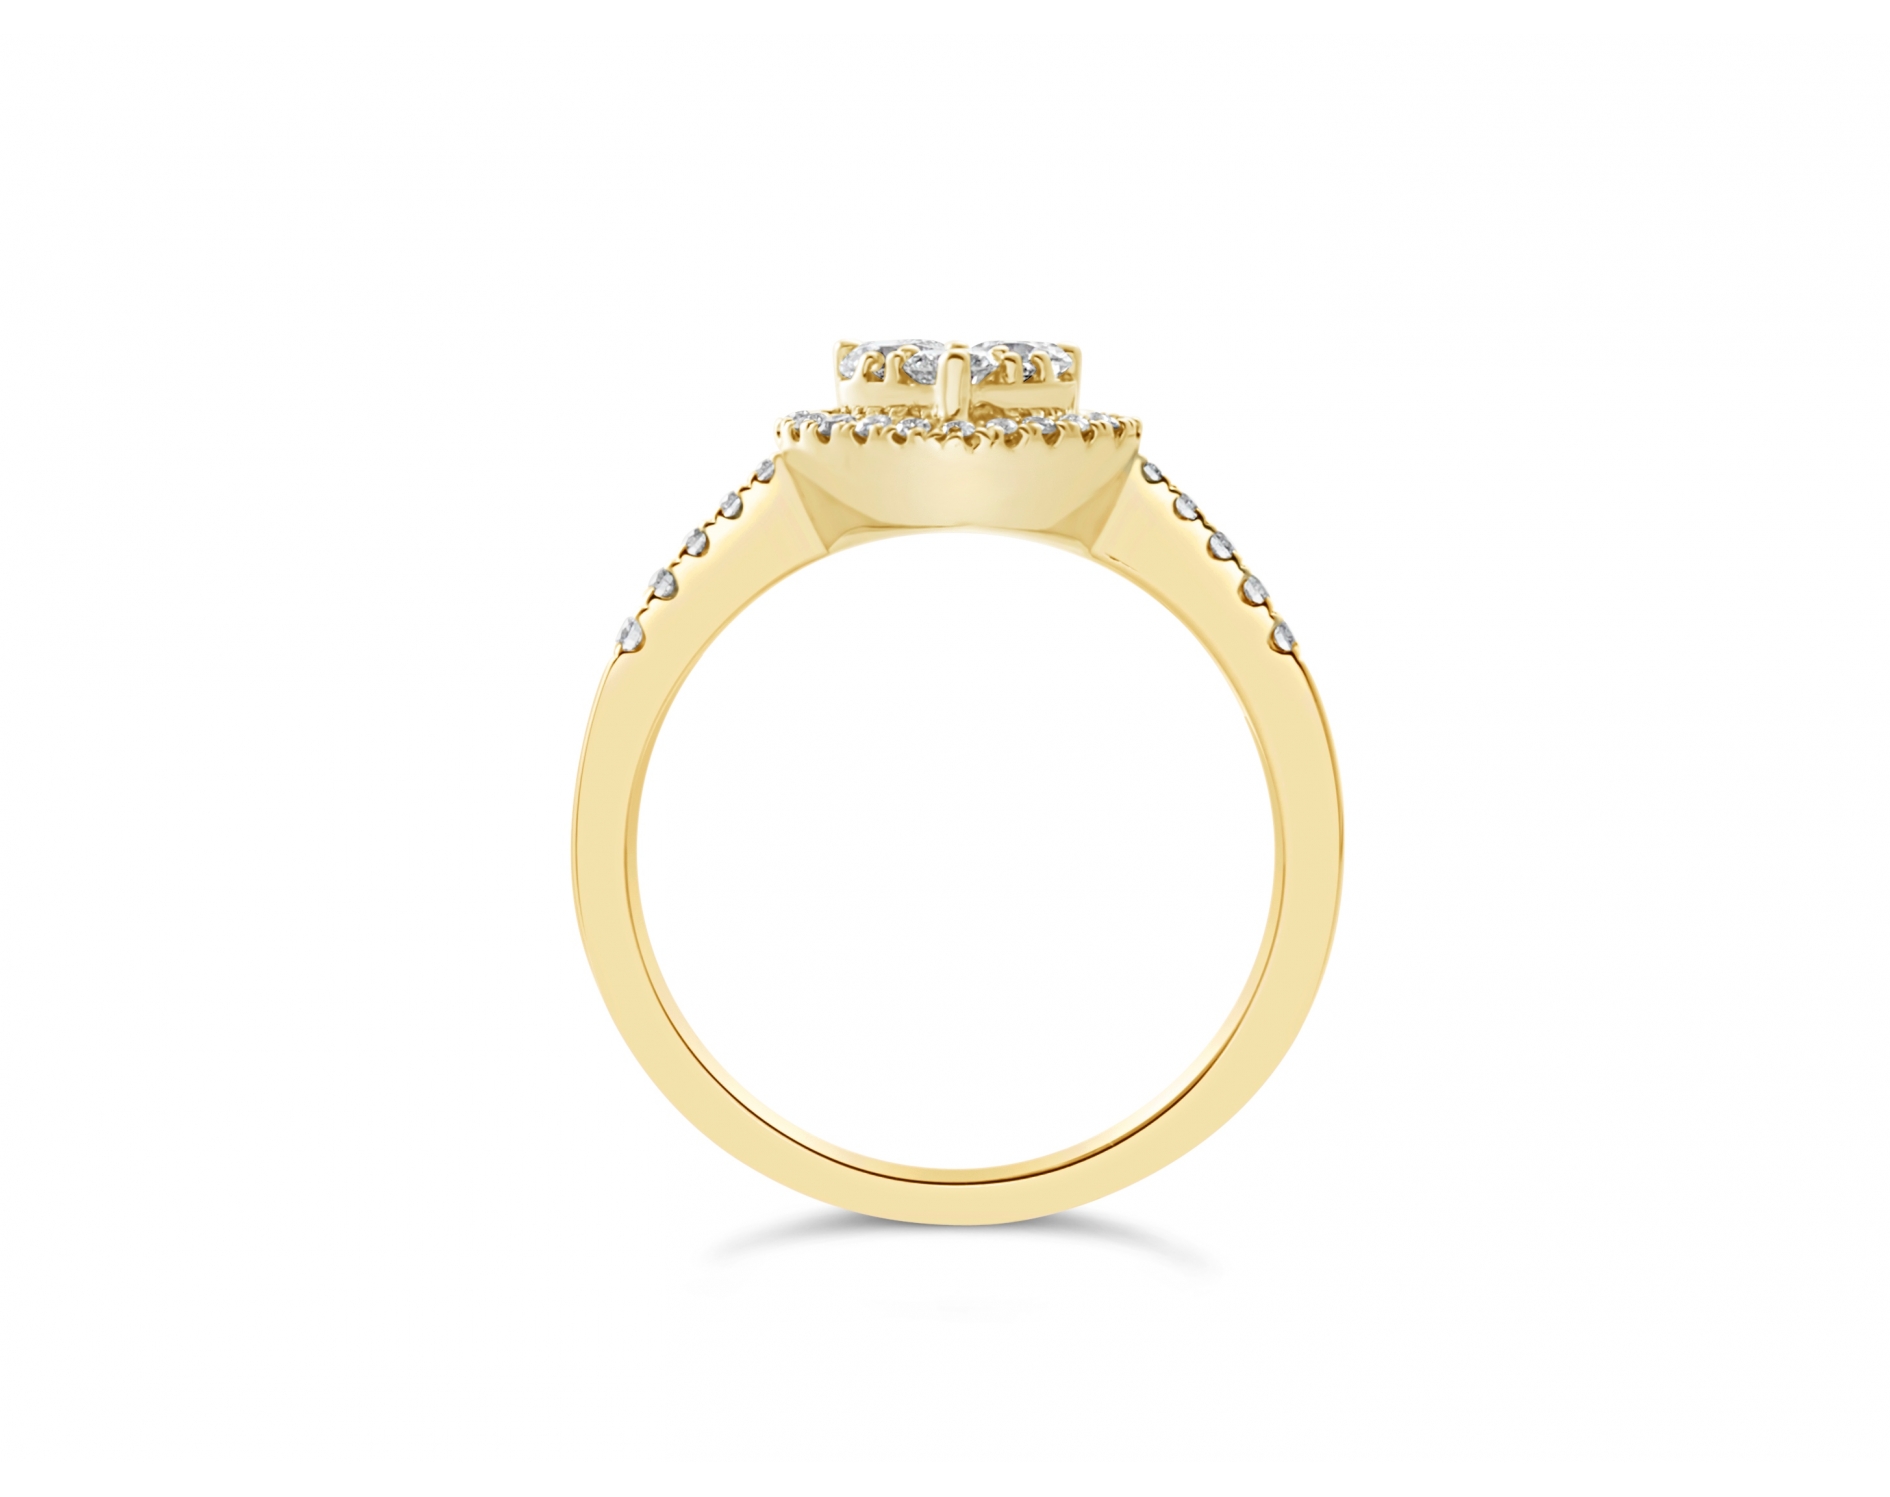 18k yellow gold heart shaped halo illusion set engagement ring with round pave set diamonds